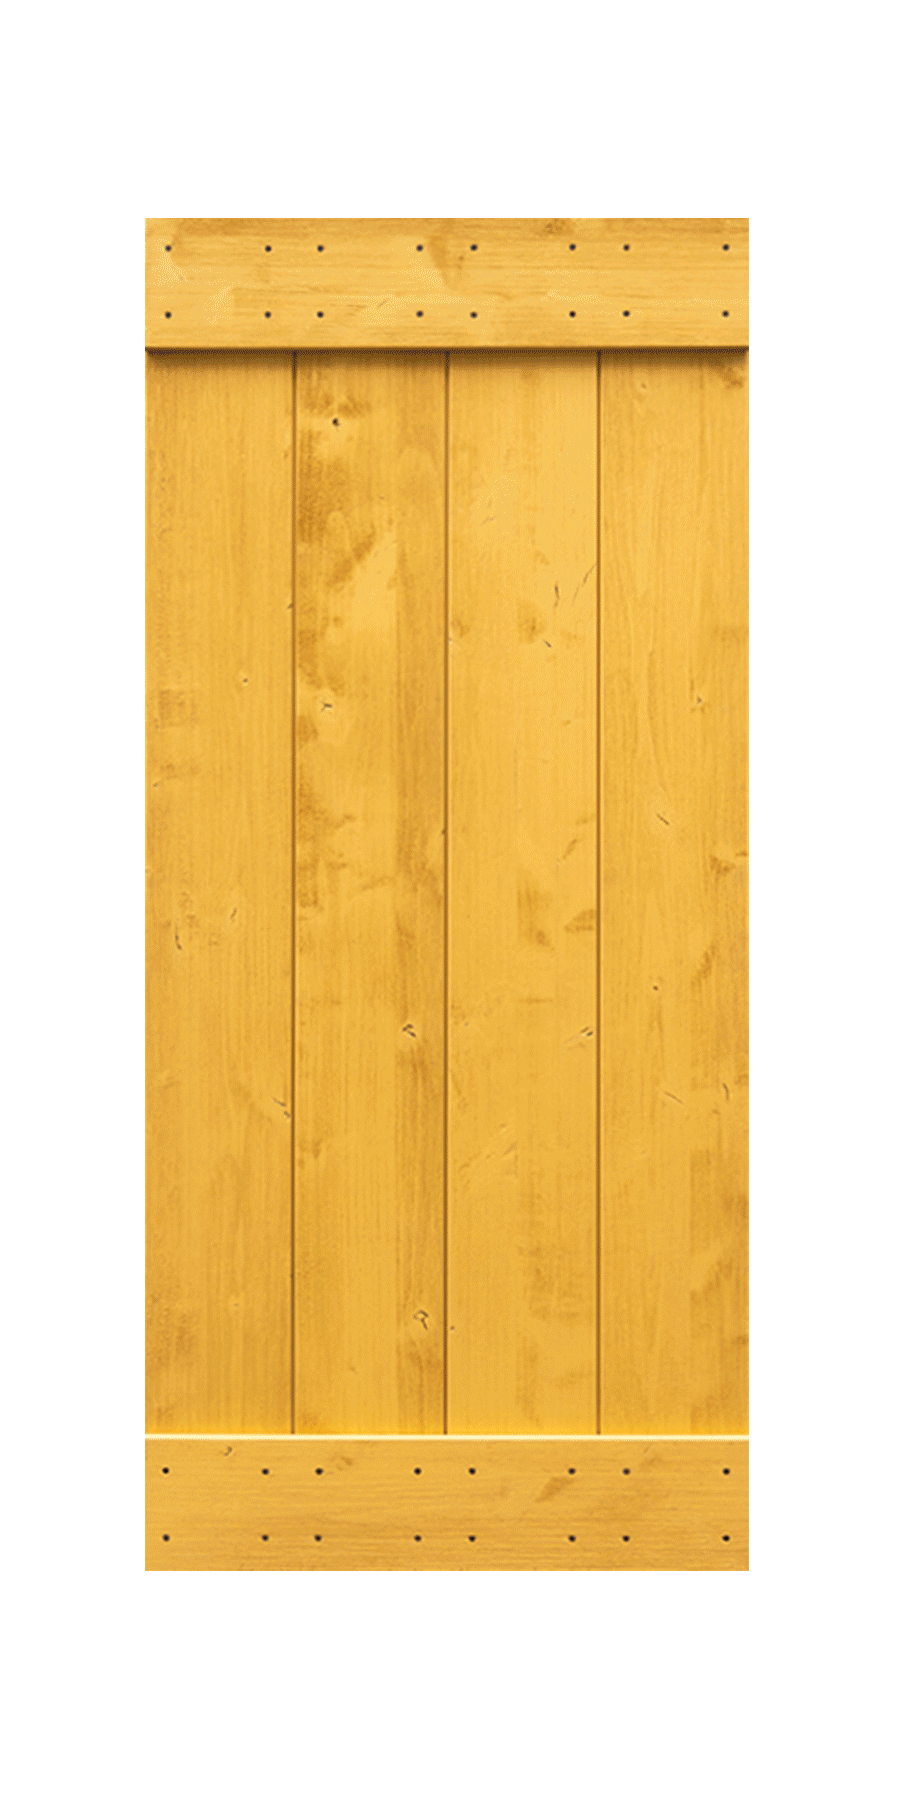 Weathered wood barn door finishes gif